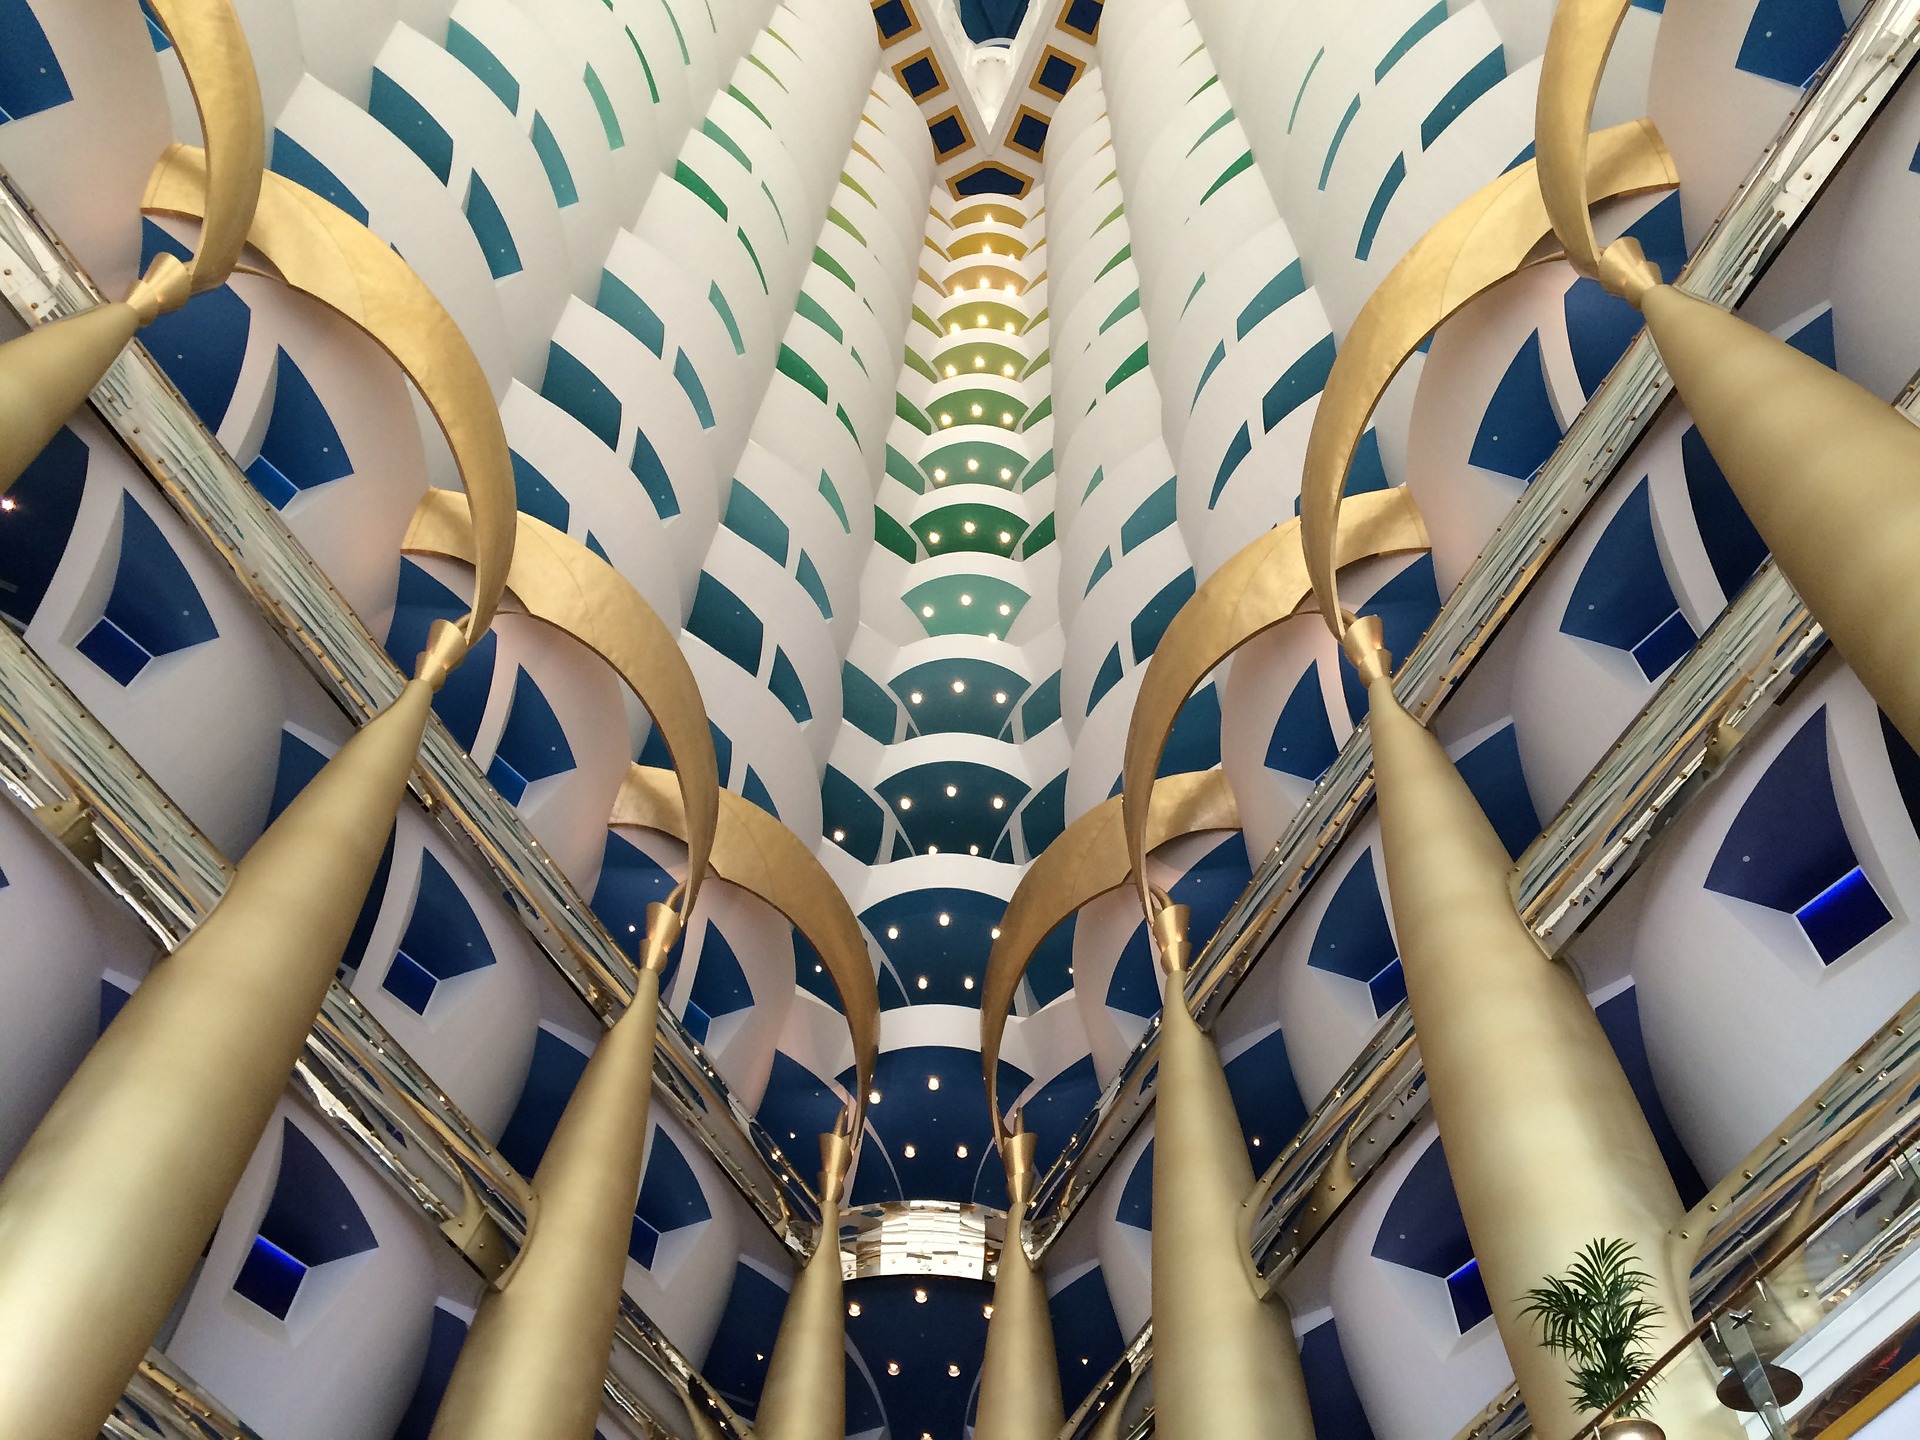 Burj al Arab Hotel lobby